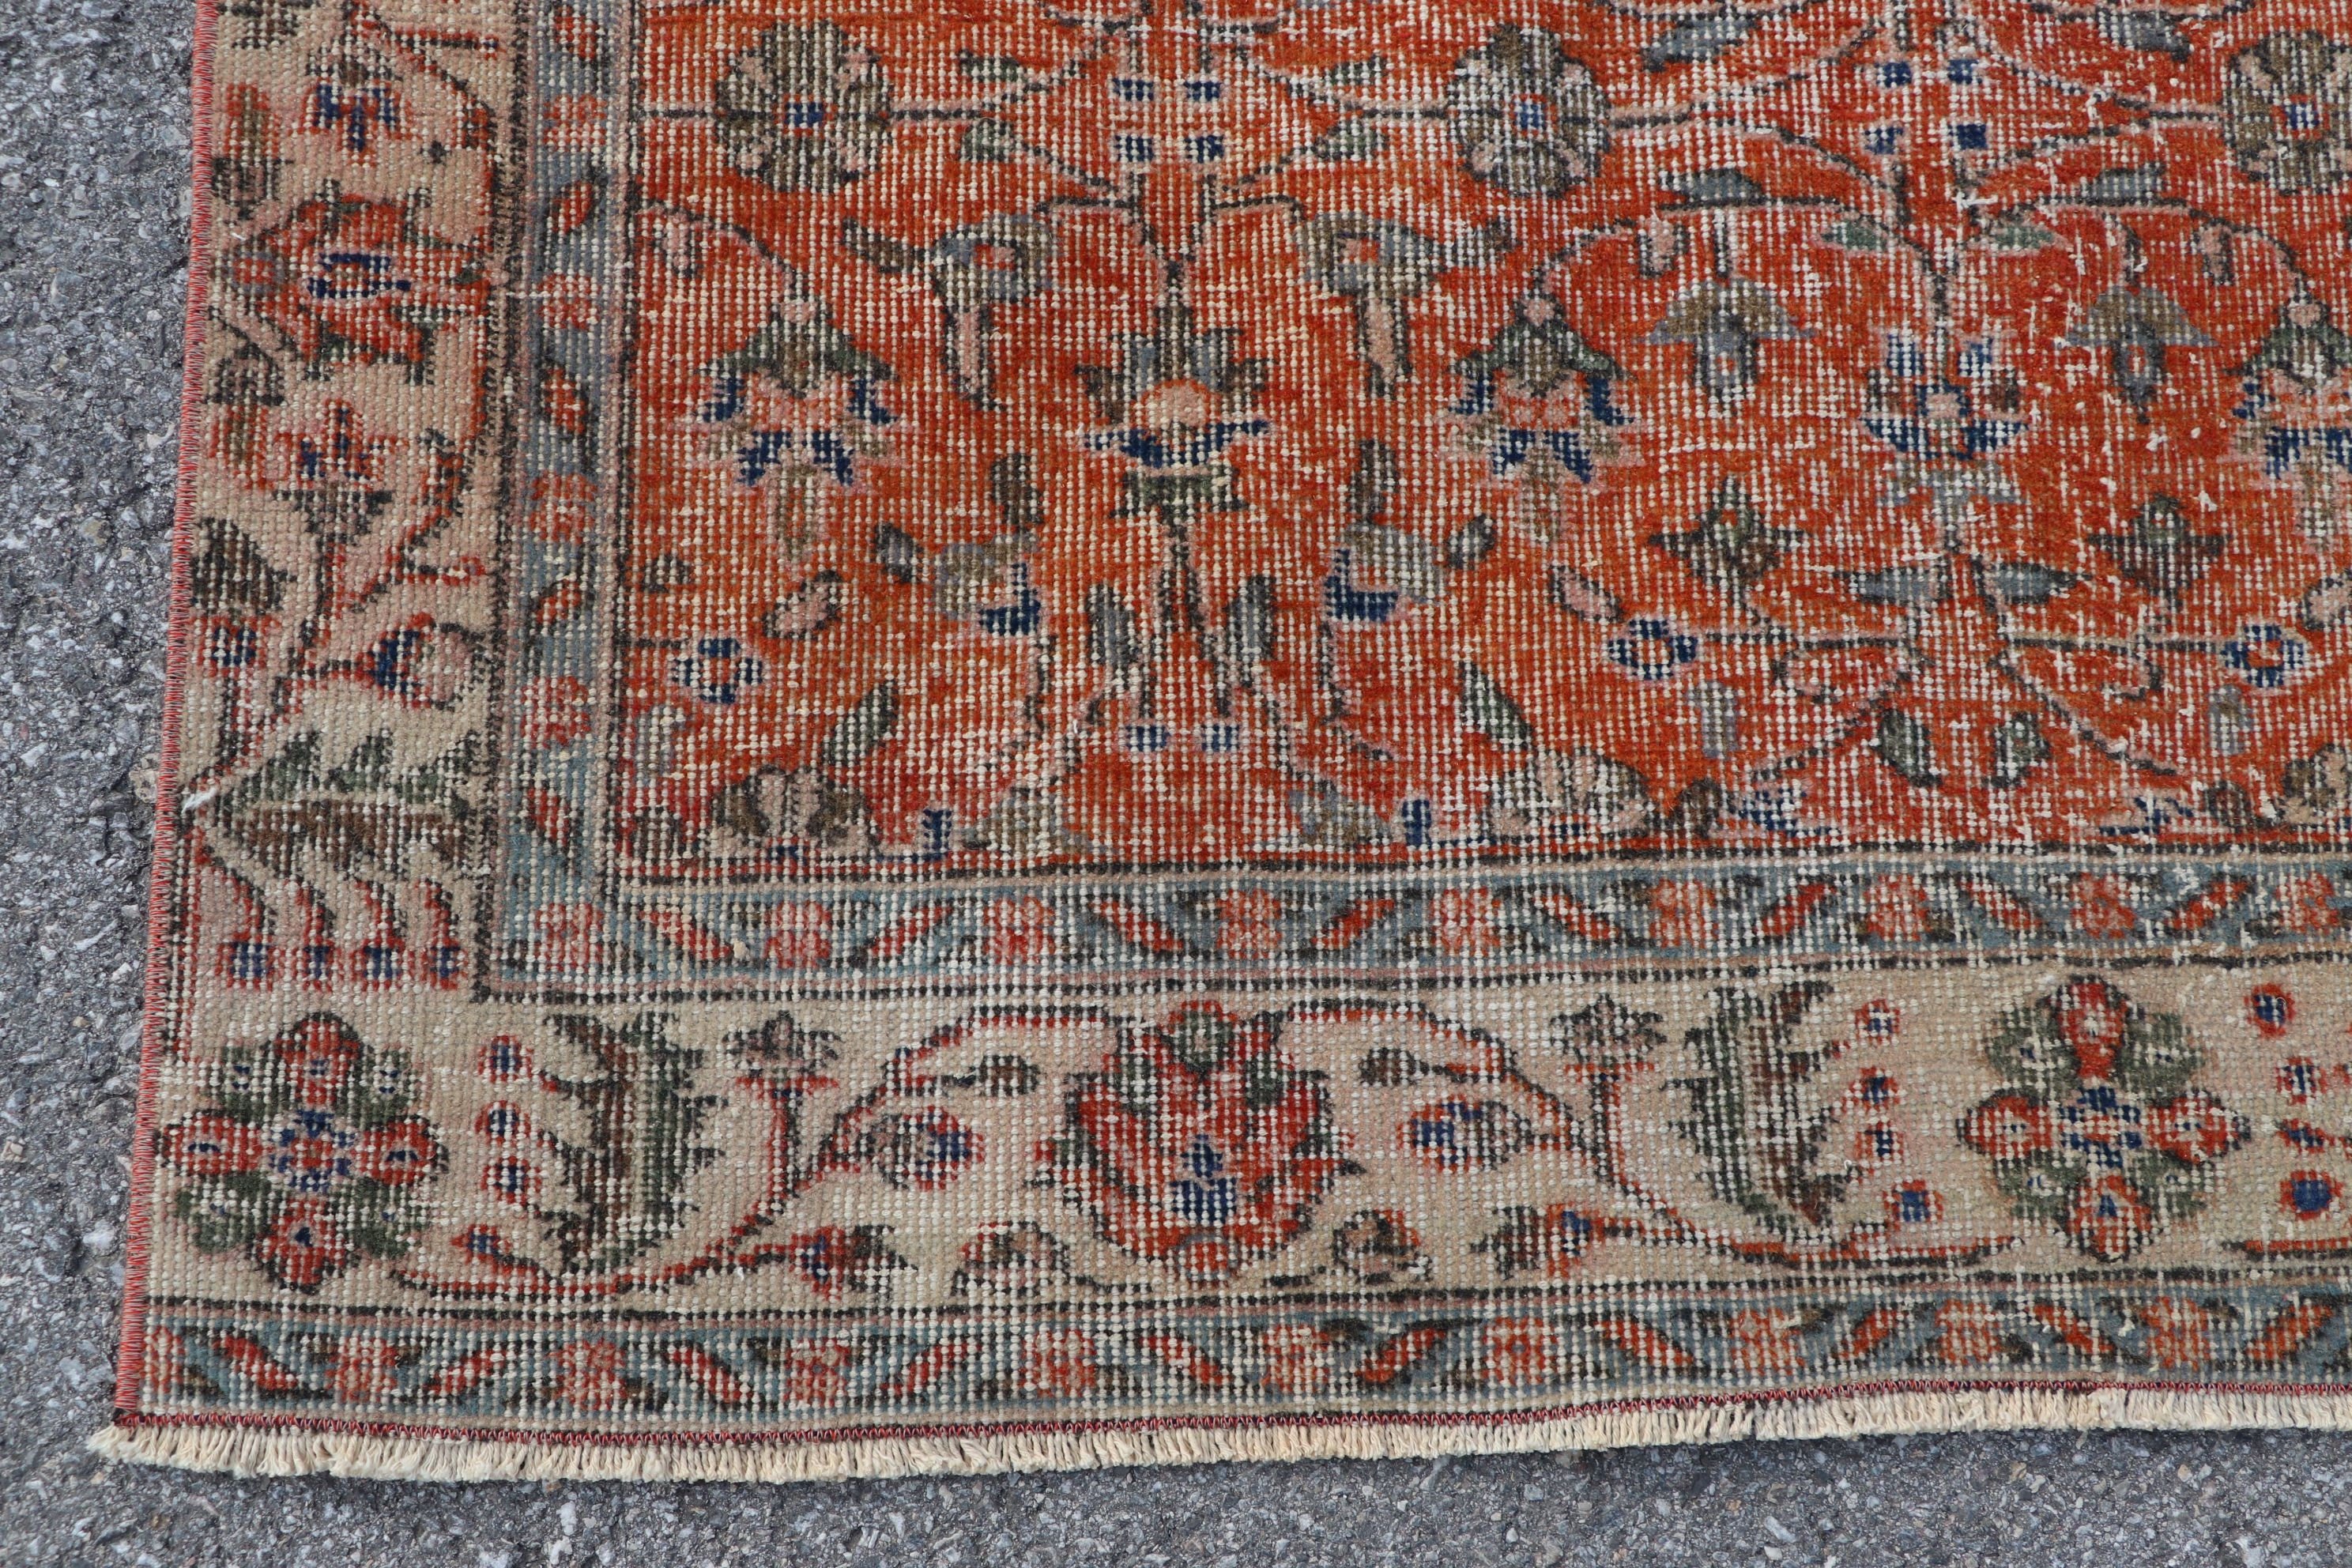 Anatolian Rug, Kitchen Rugs, Red Home Decor Rug, Wool Rugs, Corridor Rugs, Vintage Rug, 4.4x12.6 ft Runner Rug, Floor Rugs, Turkish Rug